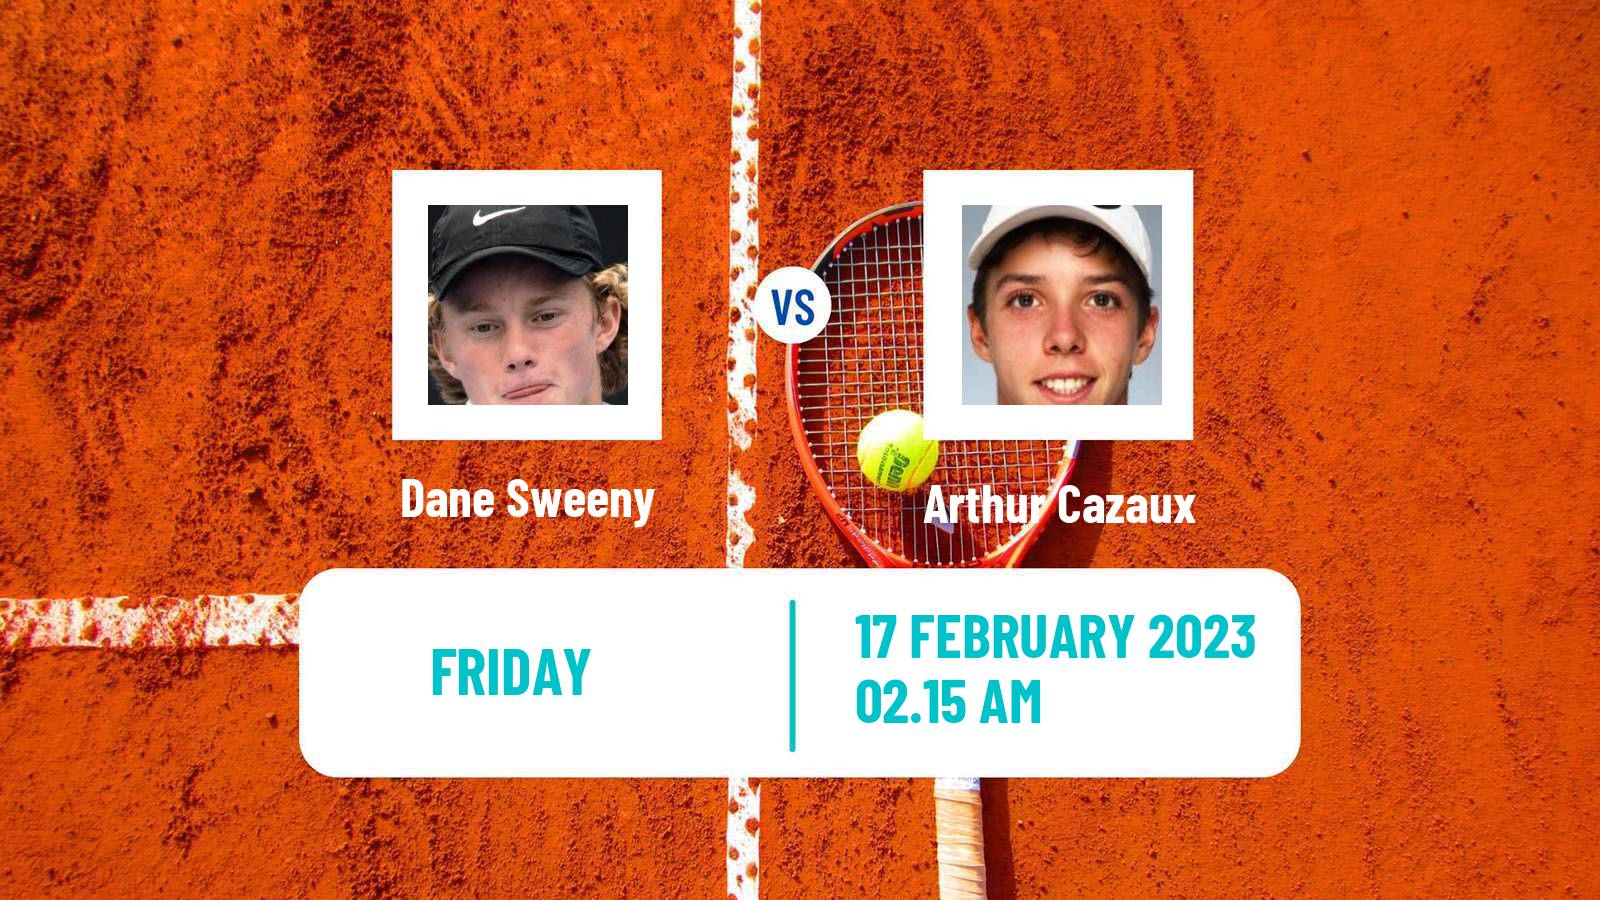 Tennis ATP Challenger Dane Sweeny - Arthur Cazaux